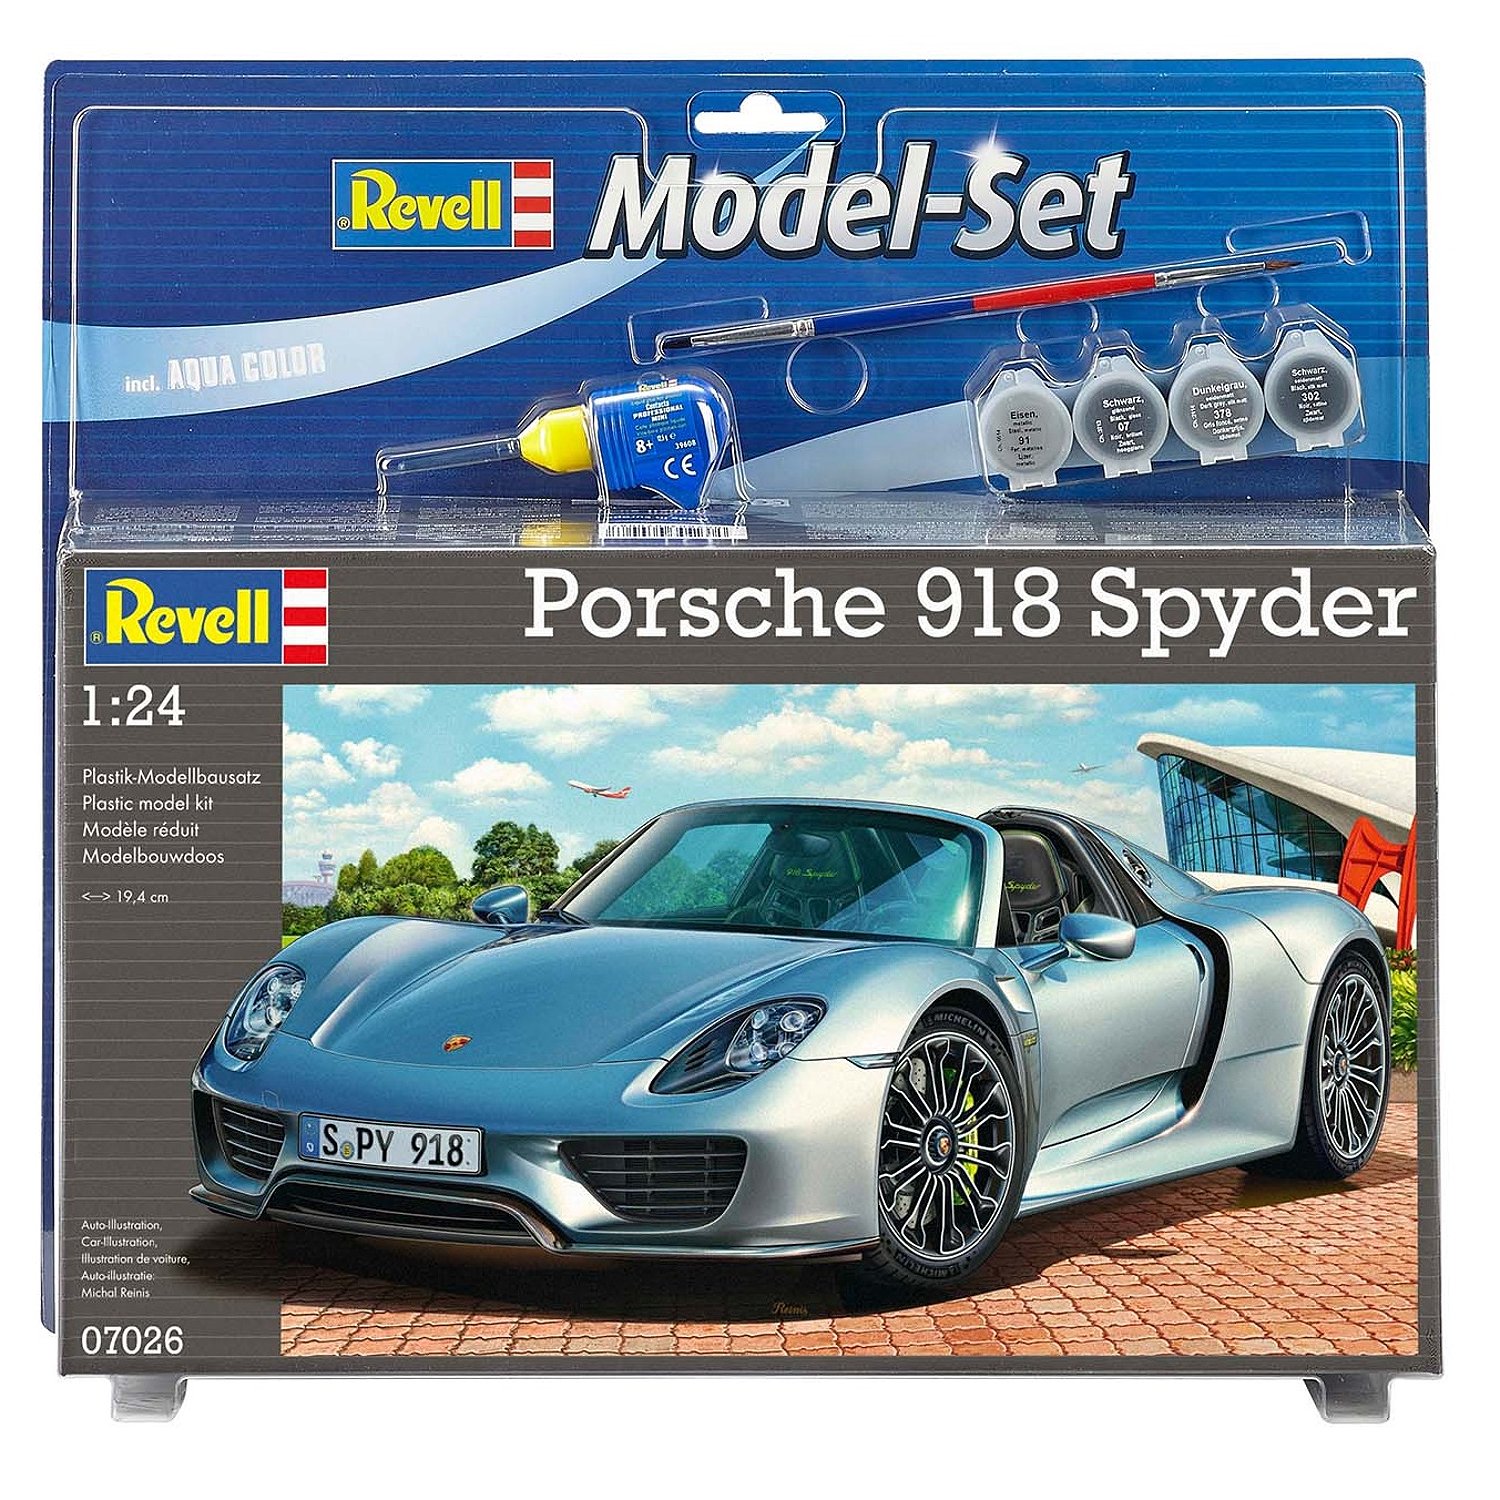 Porsche 918 spyder